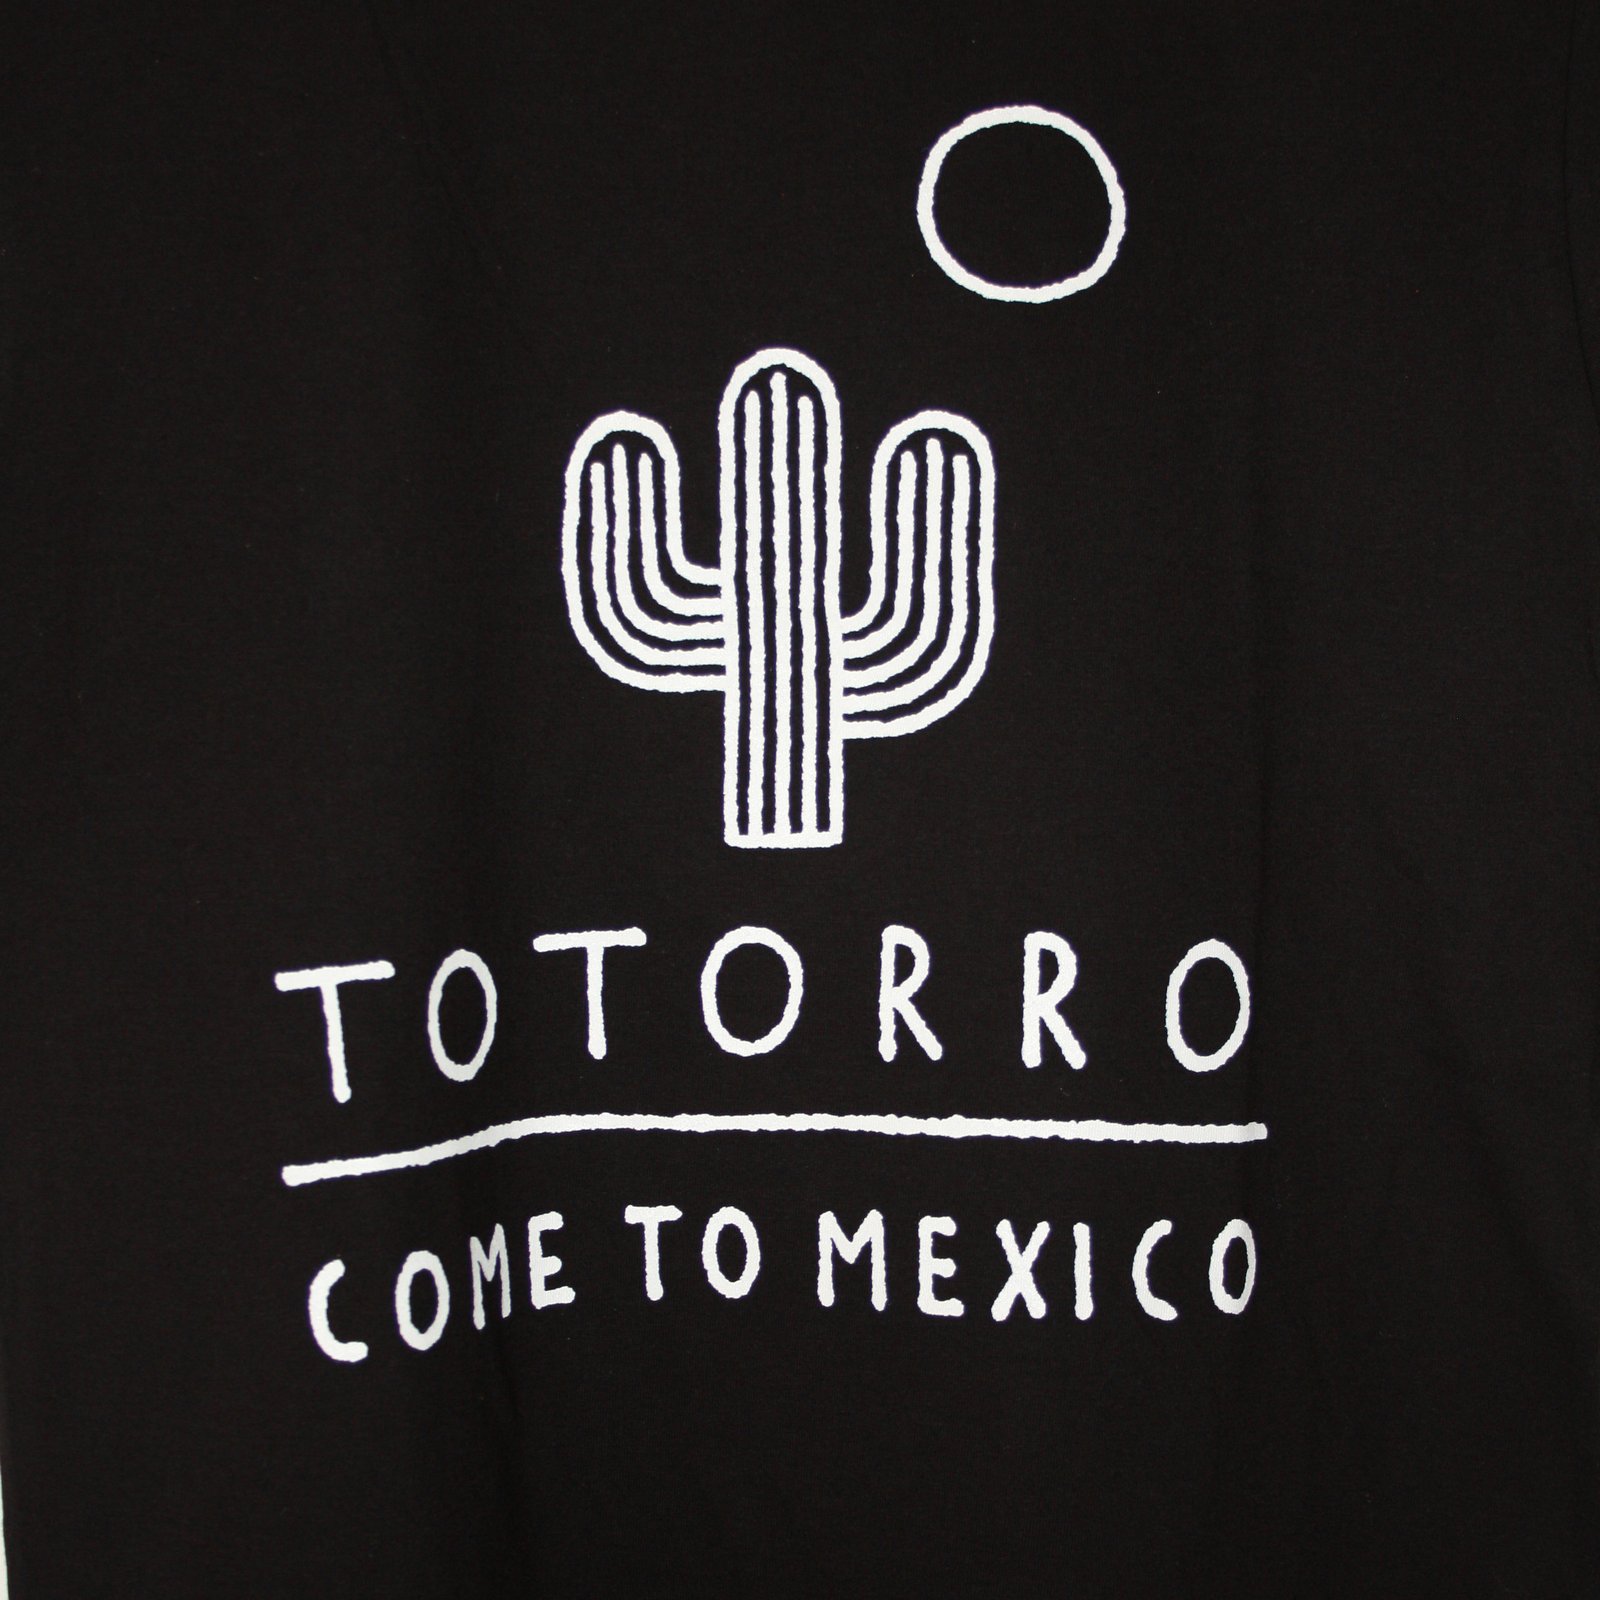 Totorro Come to Mexico tshirt (FREE SHIPPING!)